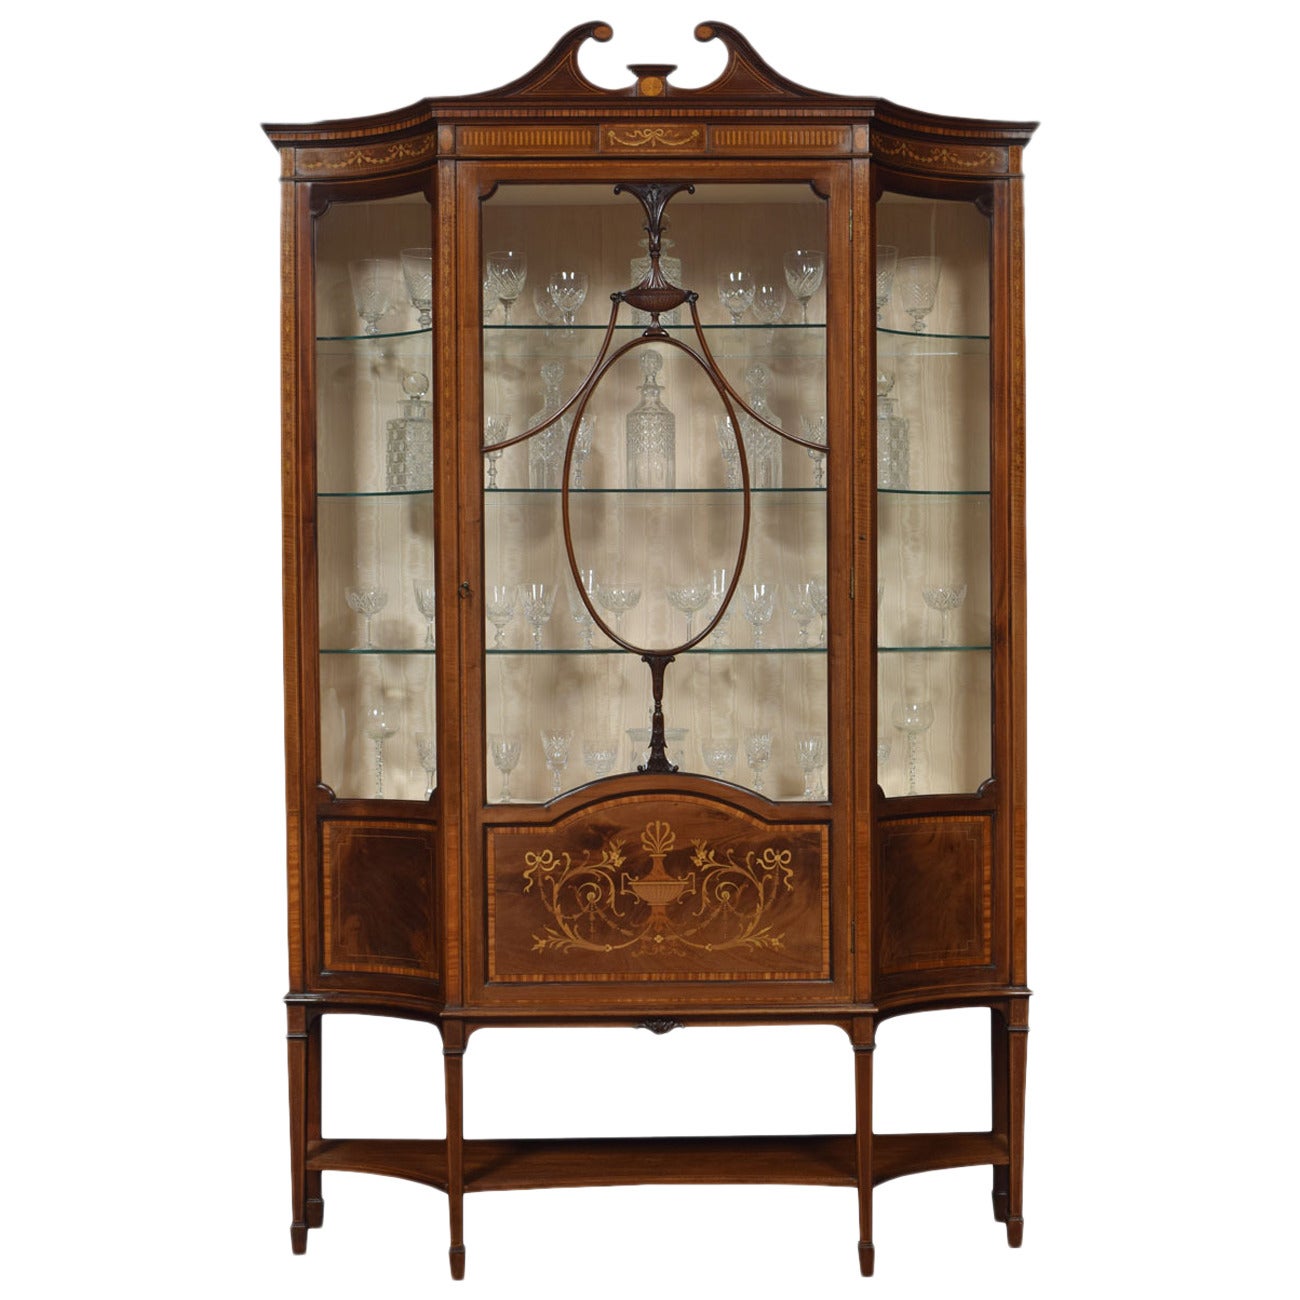 Late 19th Century Mahogany Sheraton Revival Inlaid Display Cabinet